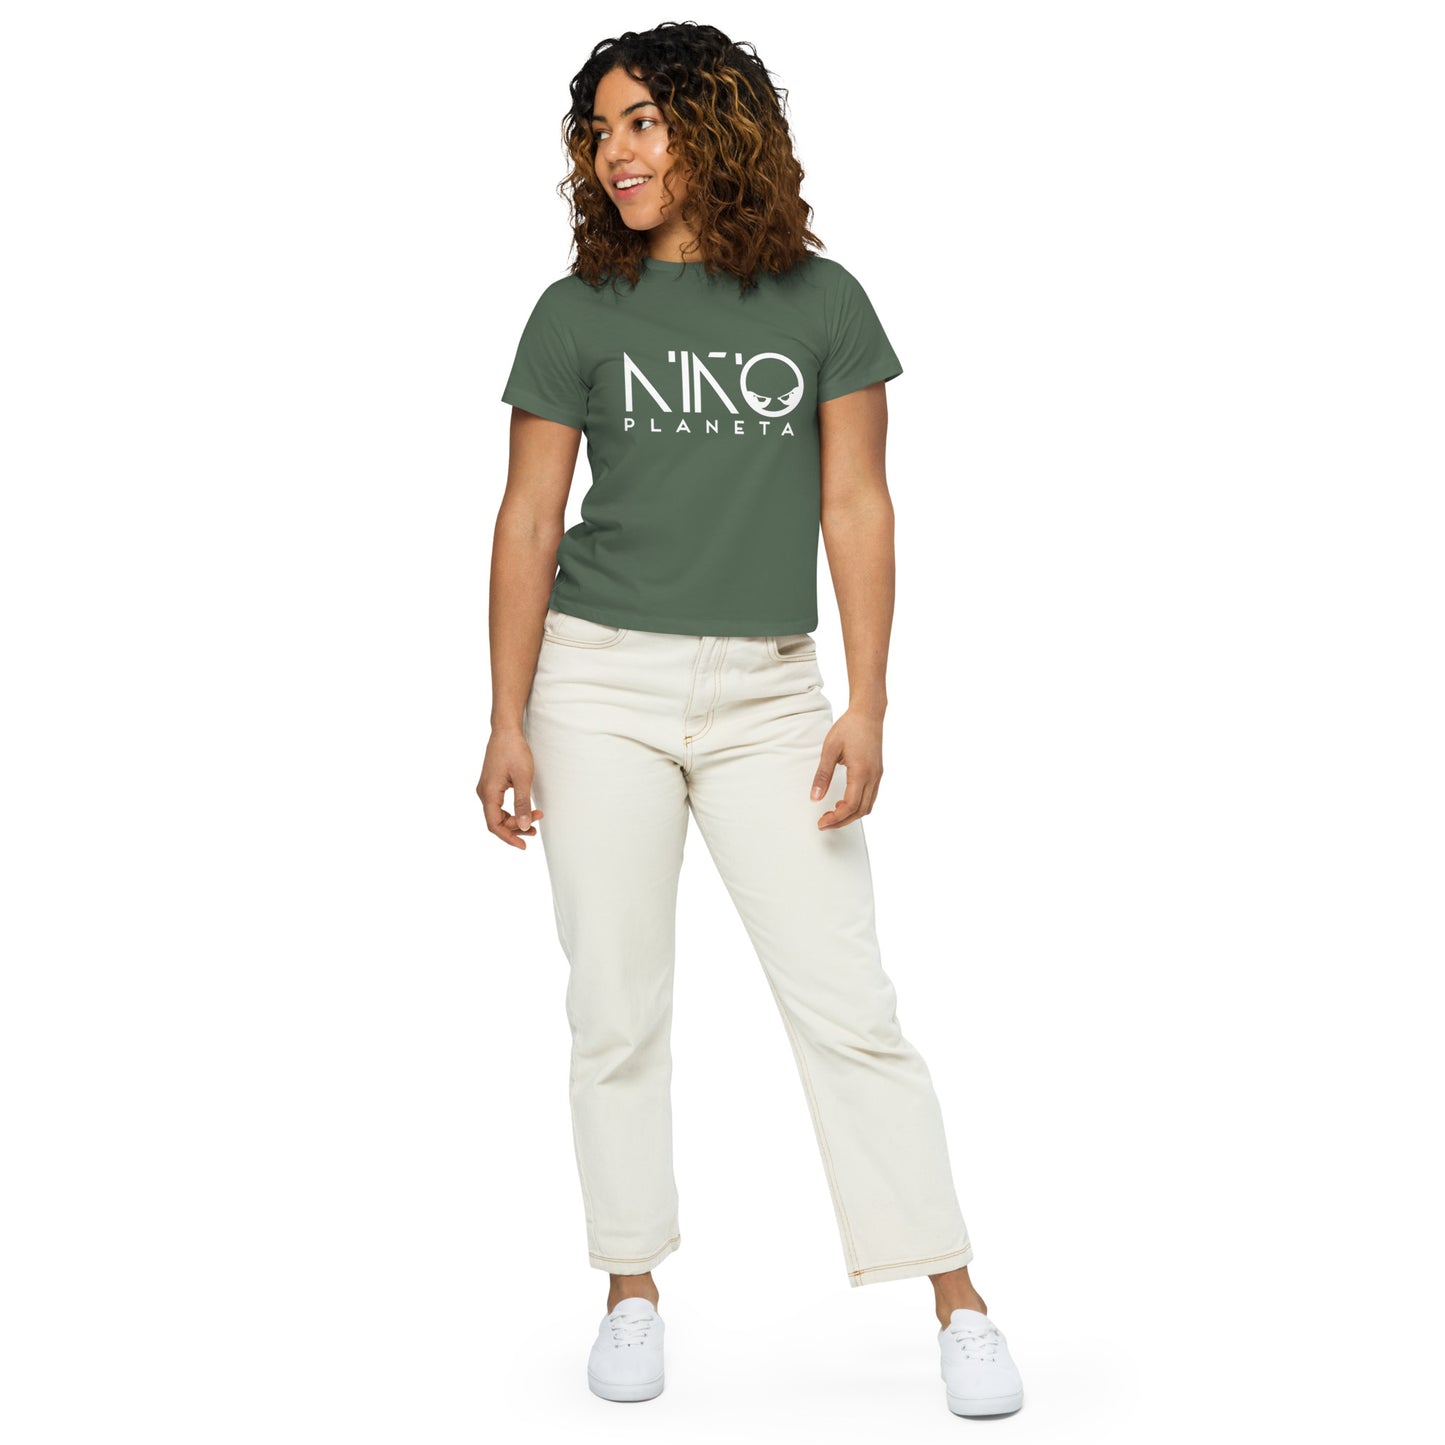 Niño Planeta Women’s high-waisted t-shirt